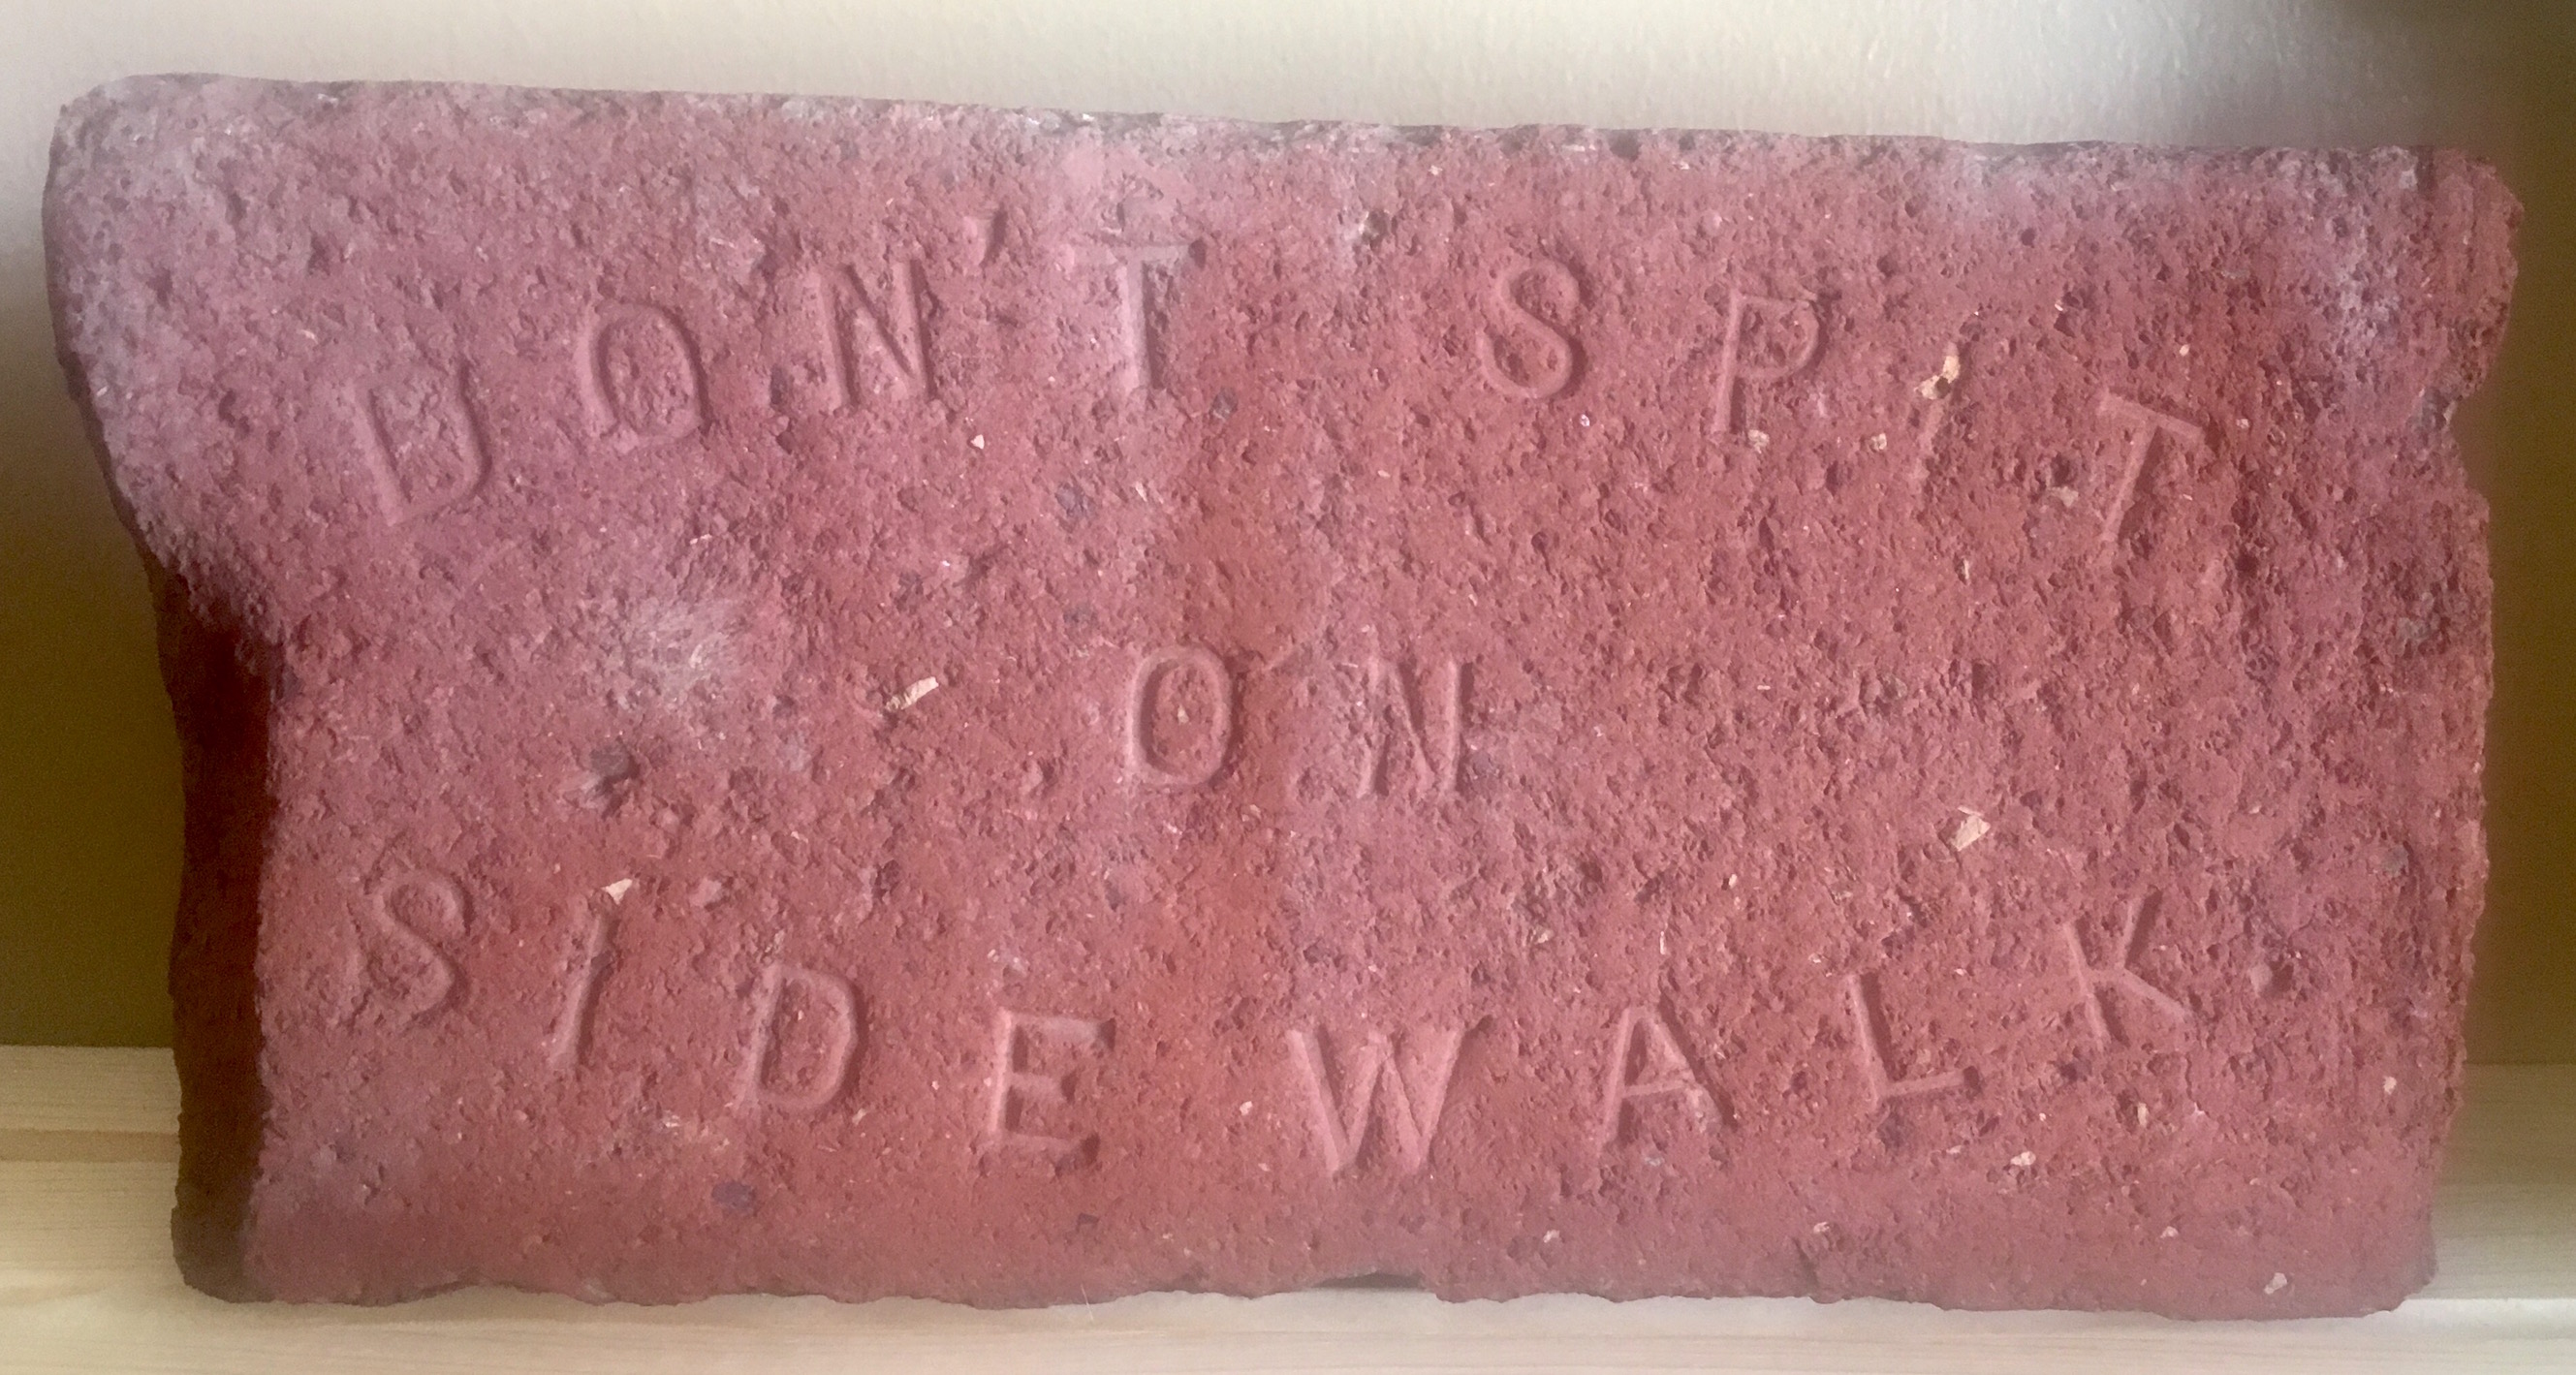 InterNACHI Inspector Museum - Don't Spit on the Sidewalk brick.